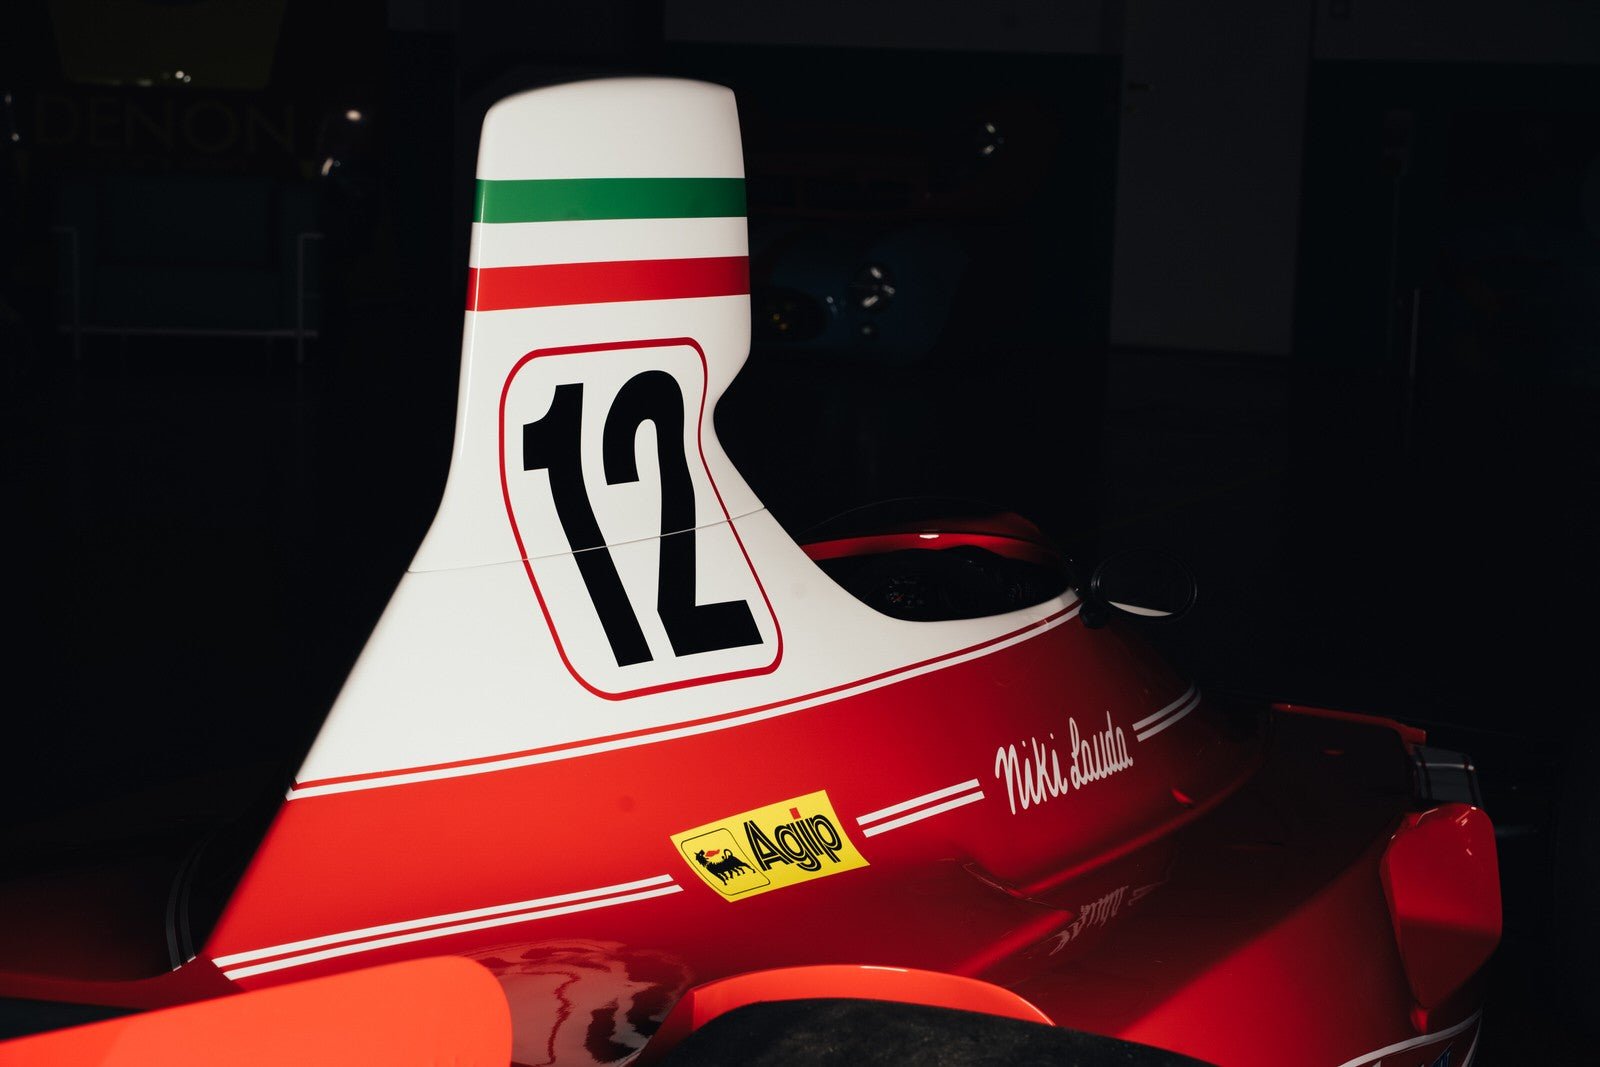 Niki Lauda's 312T - TheArsenale